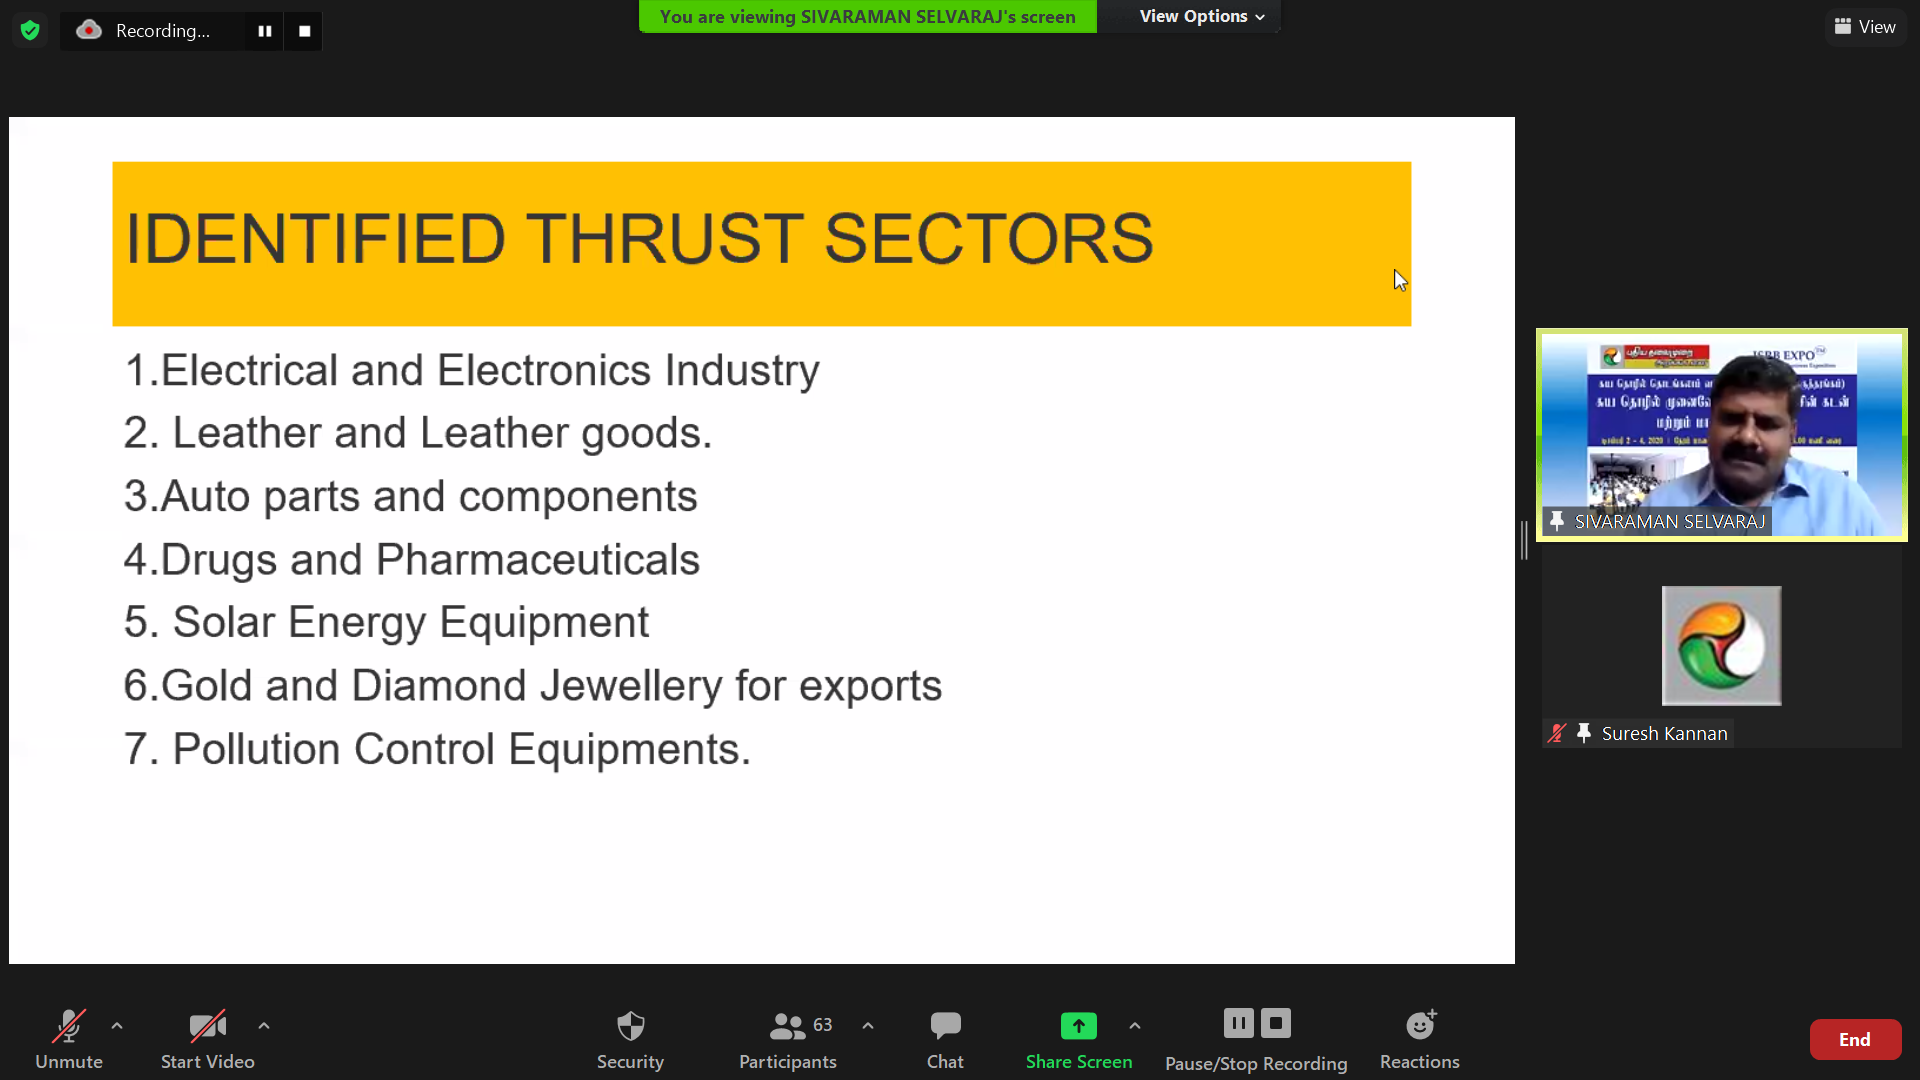 Identified Thrust Sectors